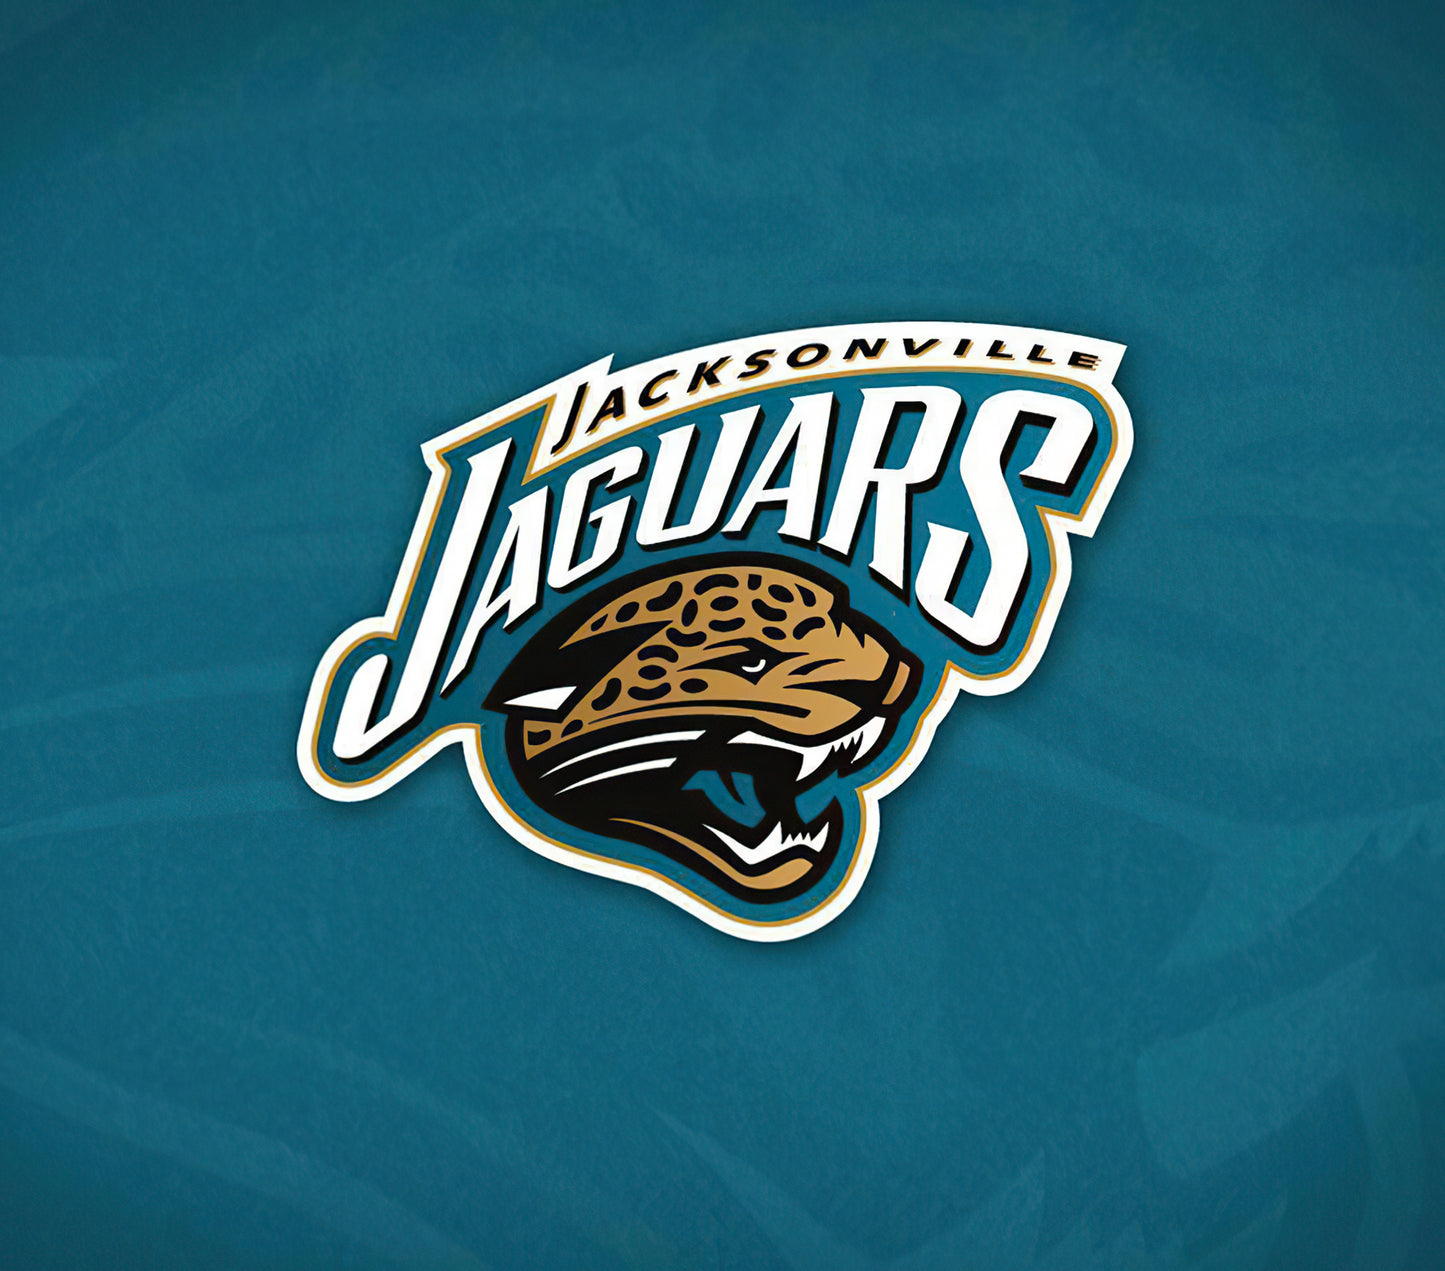 Jacksonville Jaguars 20oz Tumbler